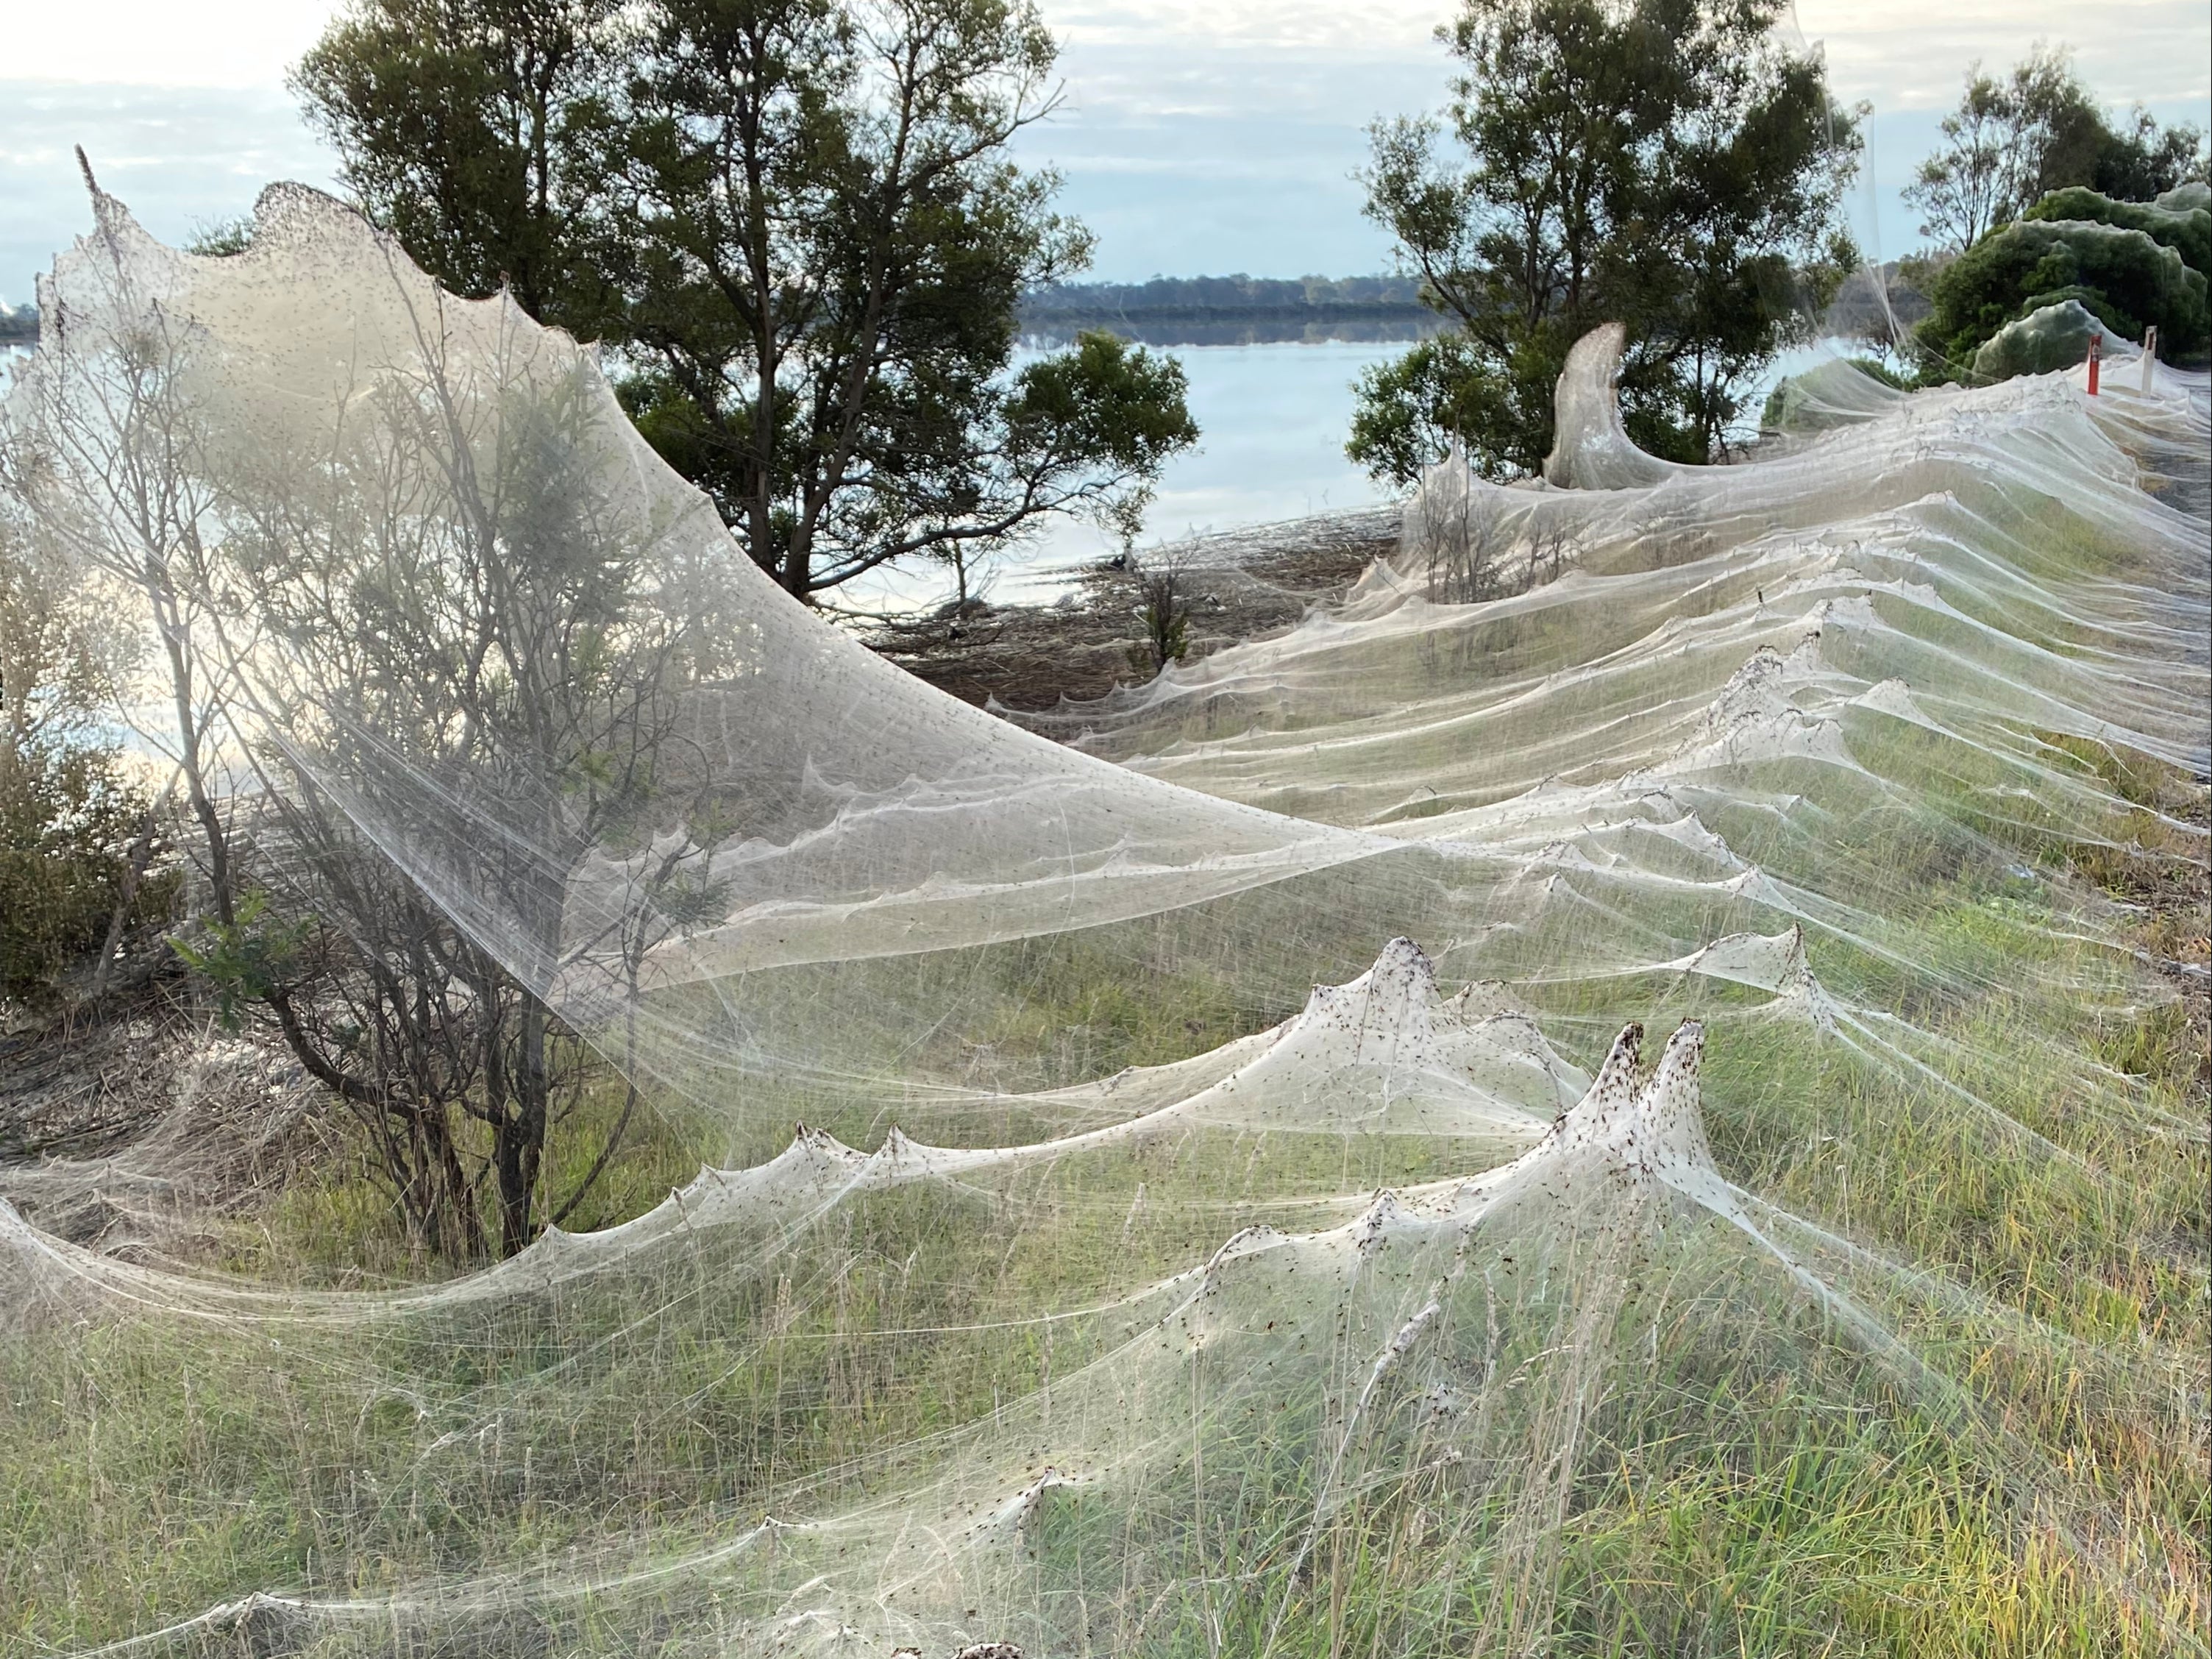 Spider apocalypse' hits Australia as clouds of cobwebs blanket landscape